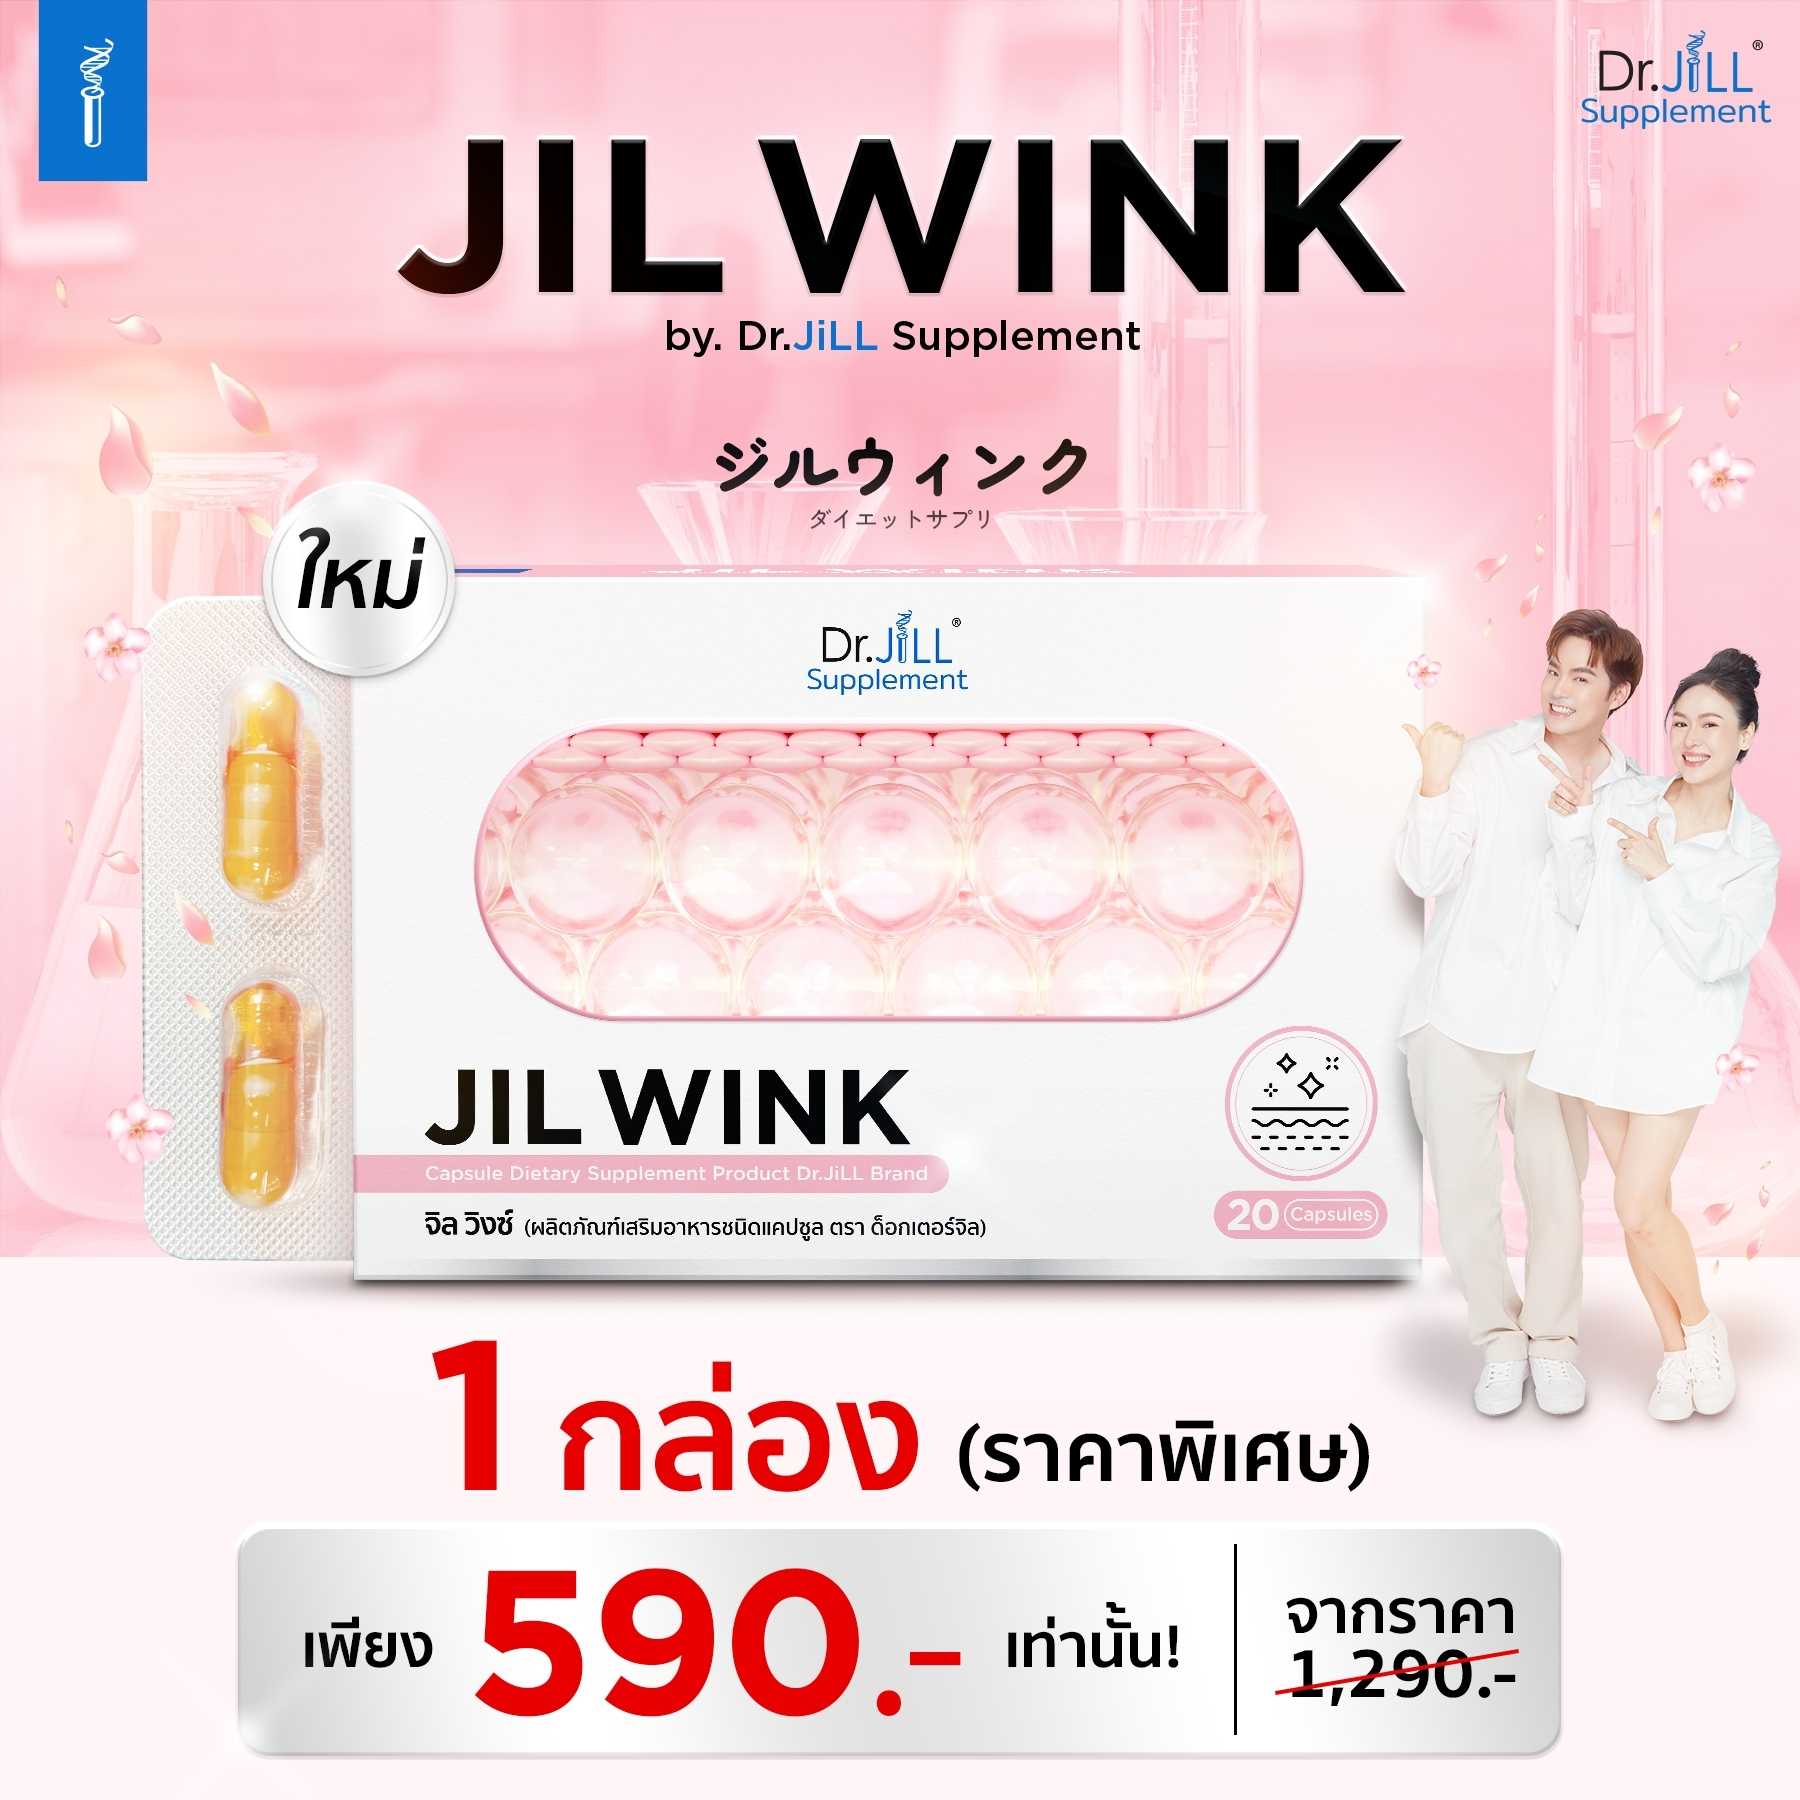 JIL WINK ผลิตภัณฑ์เสริมอาหาร สูตรบำรุงผิวขาว ต้านชรา Dr.Jill 20 แคปซูล